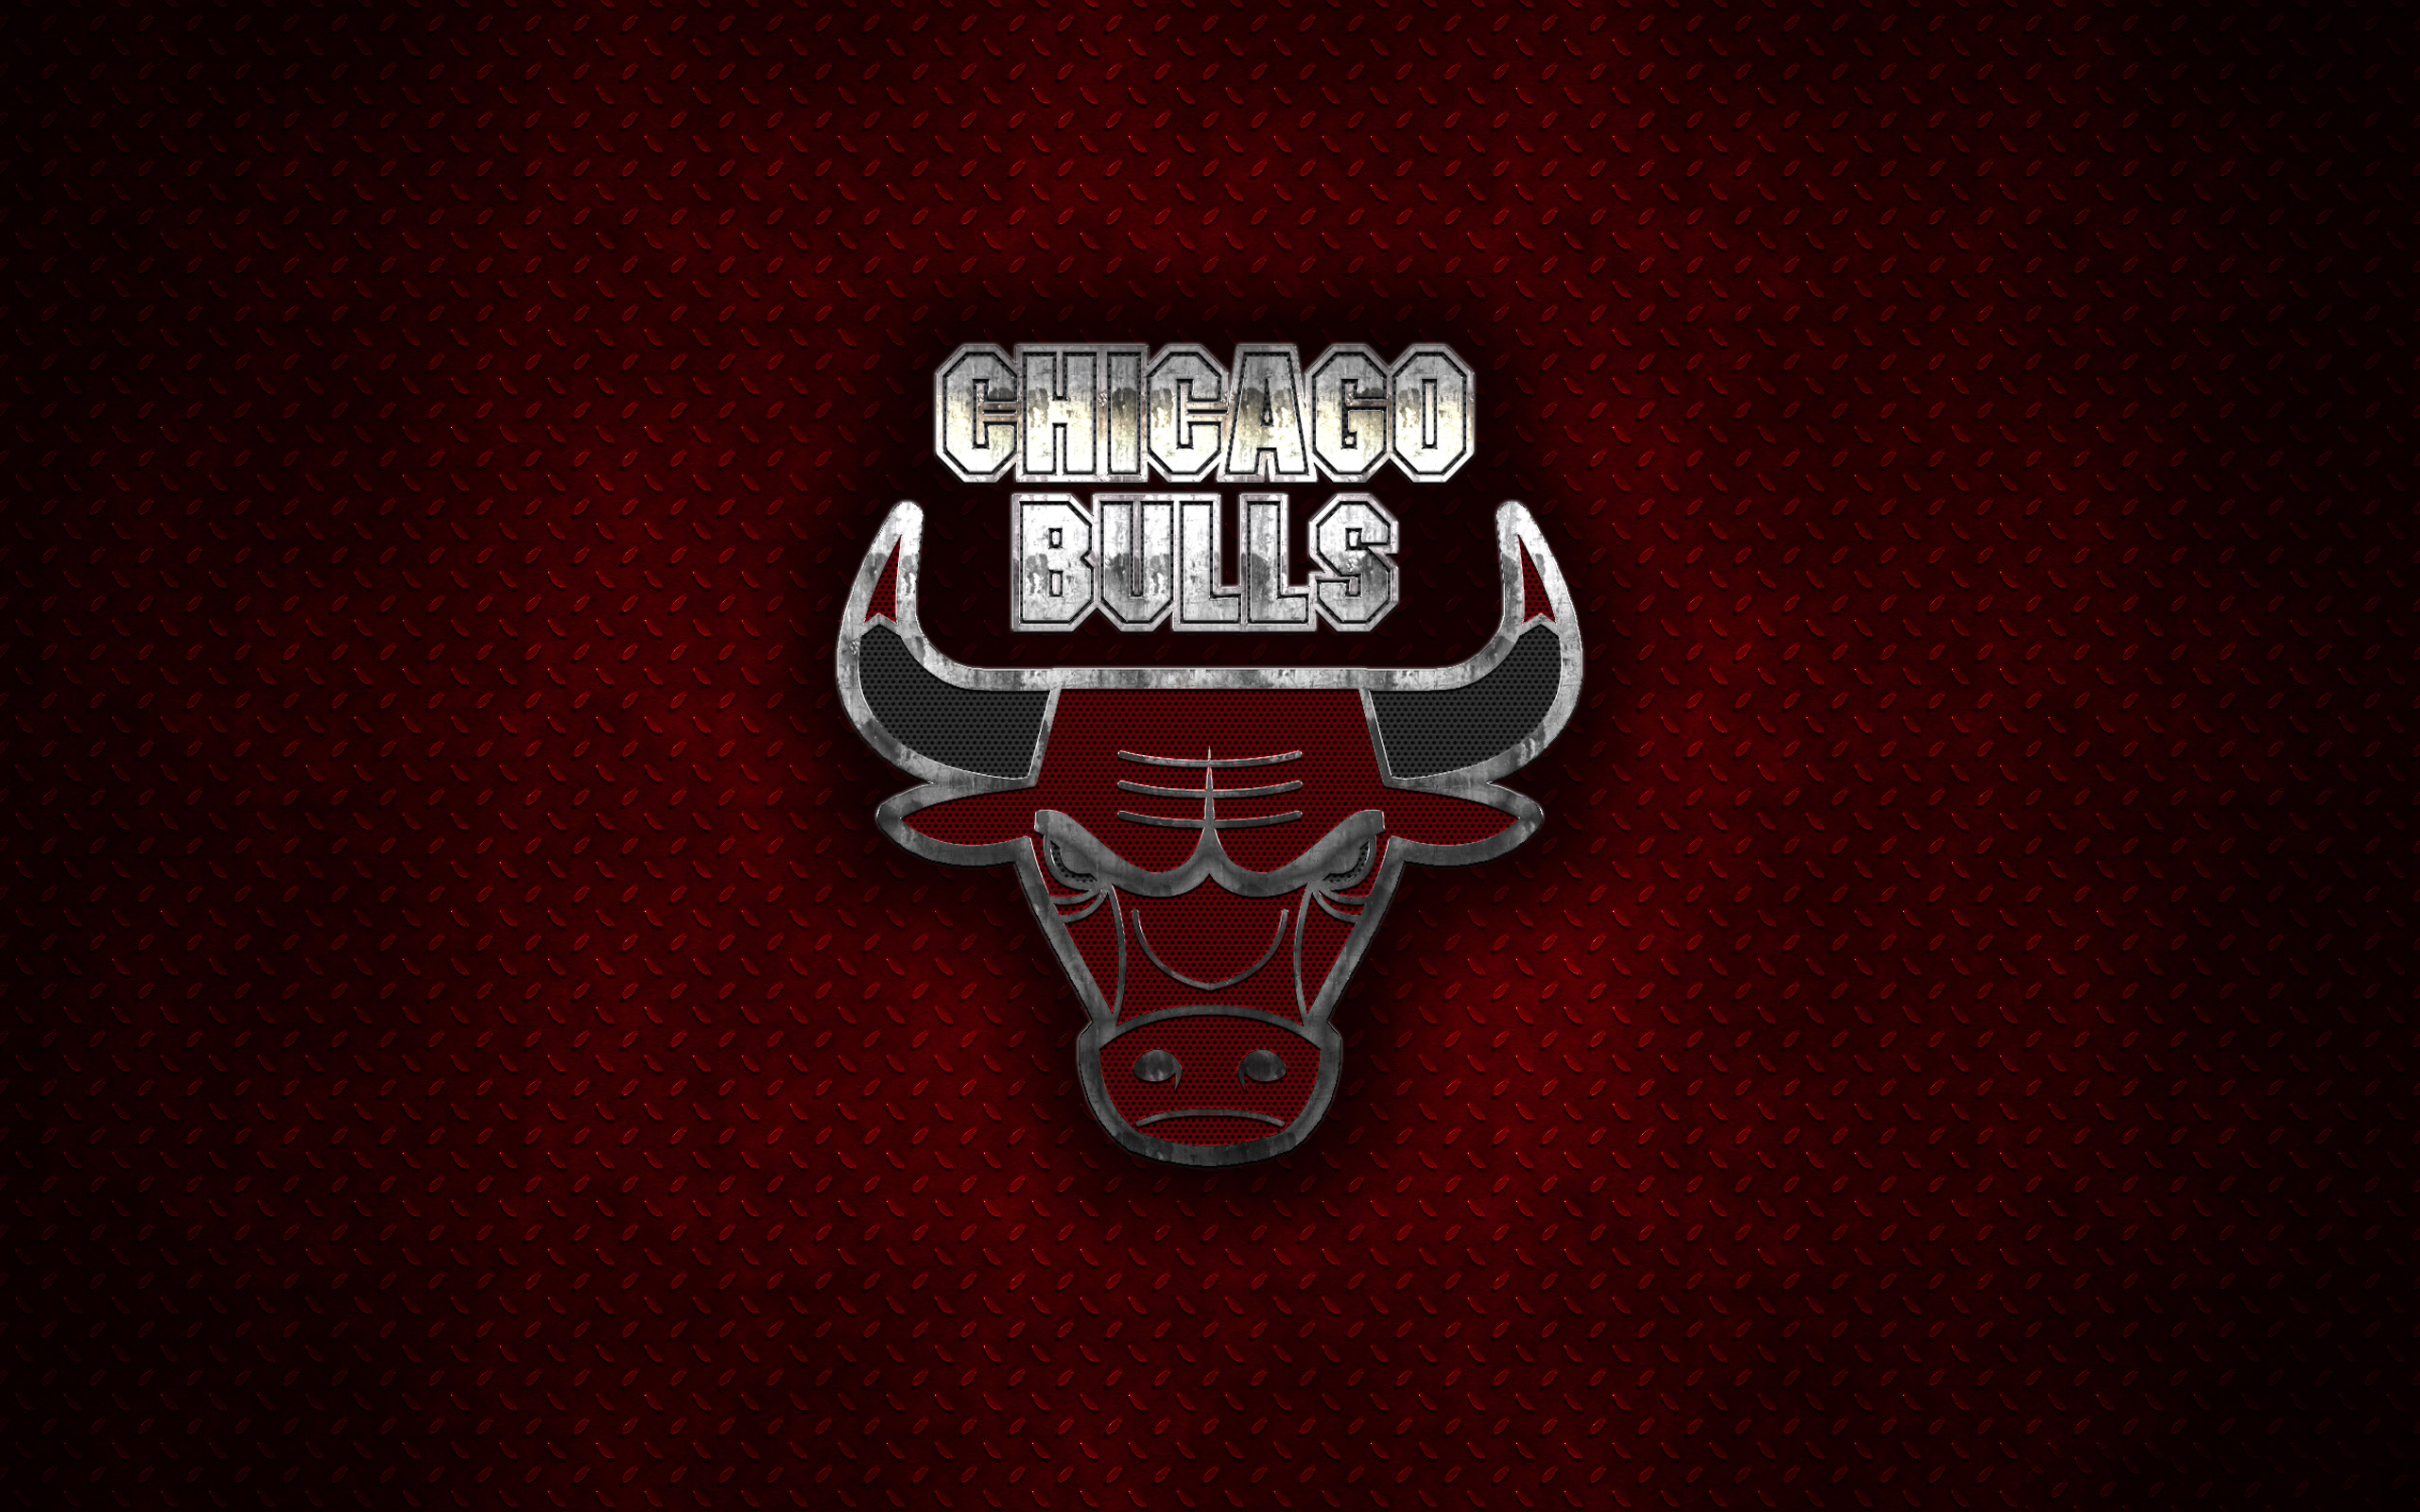  Chicago Bulls Full HD Wallpaper